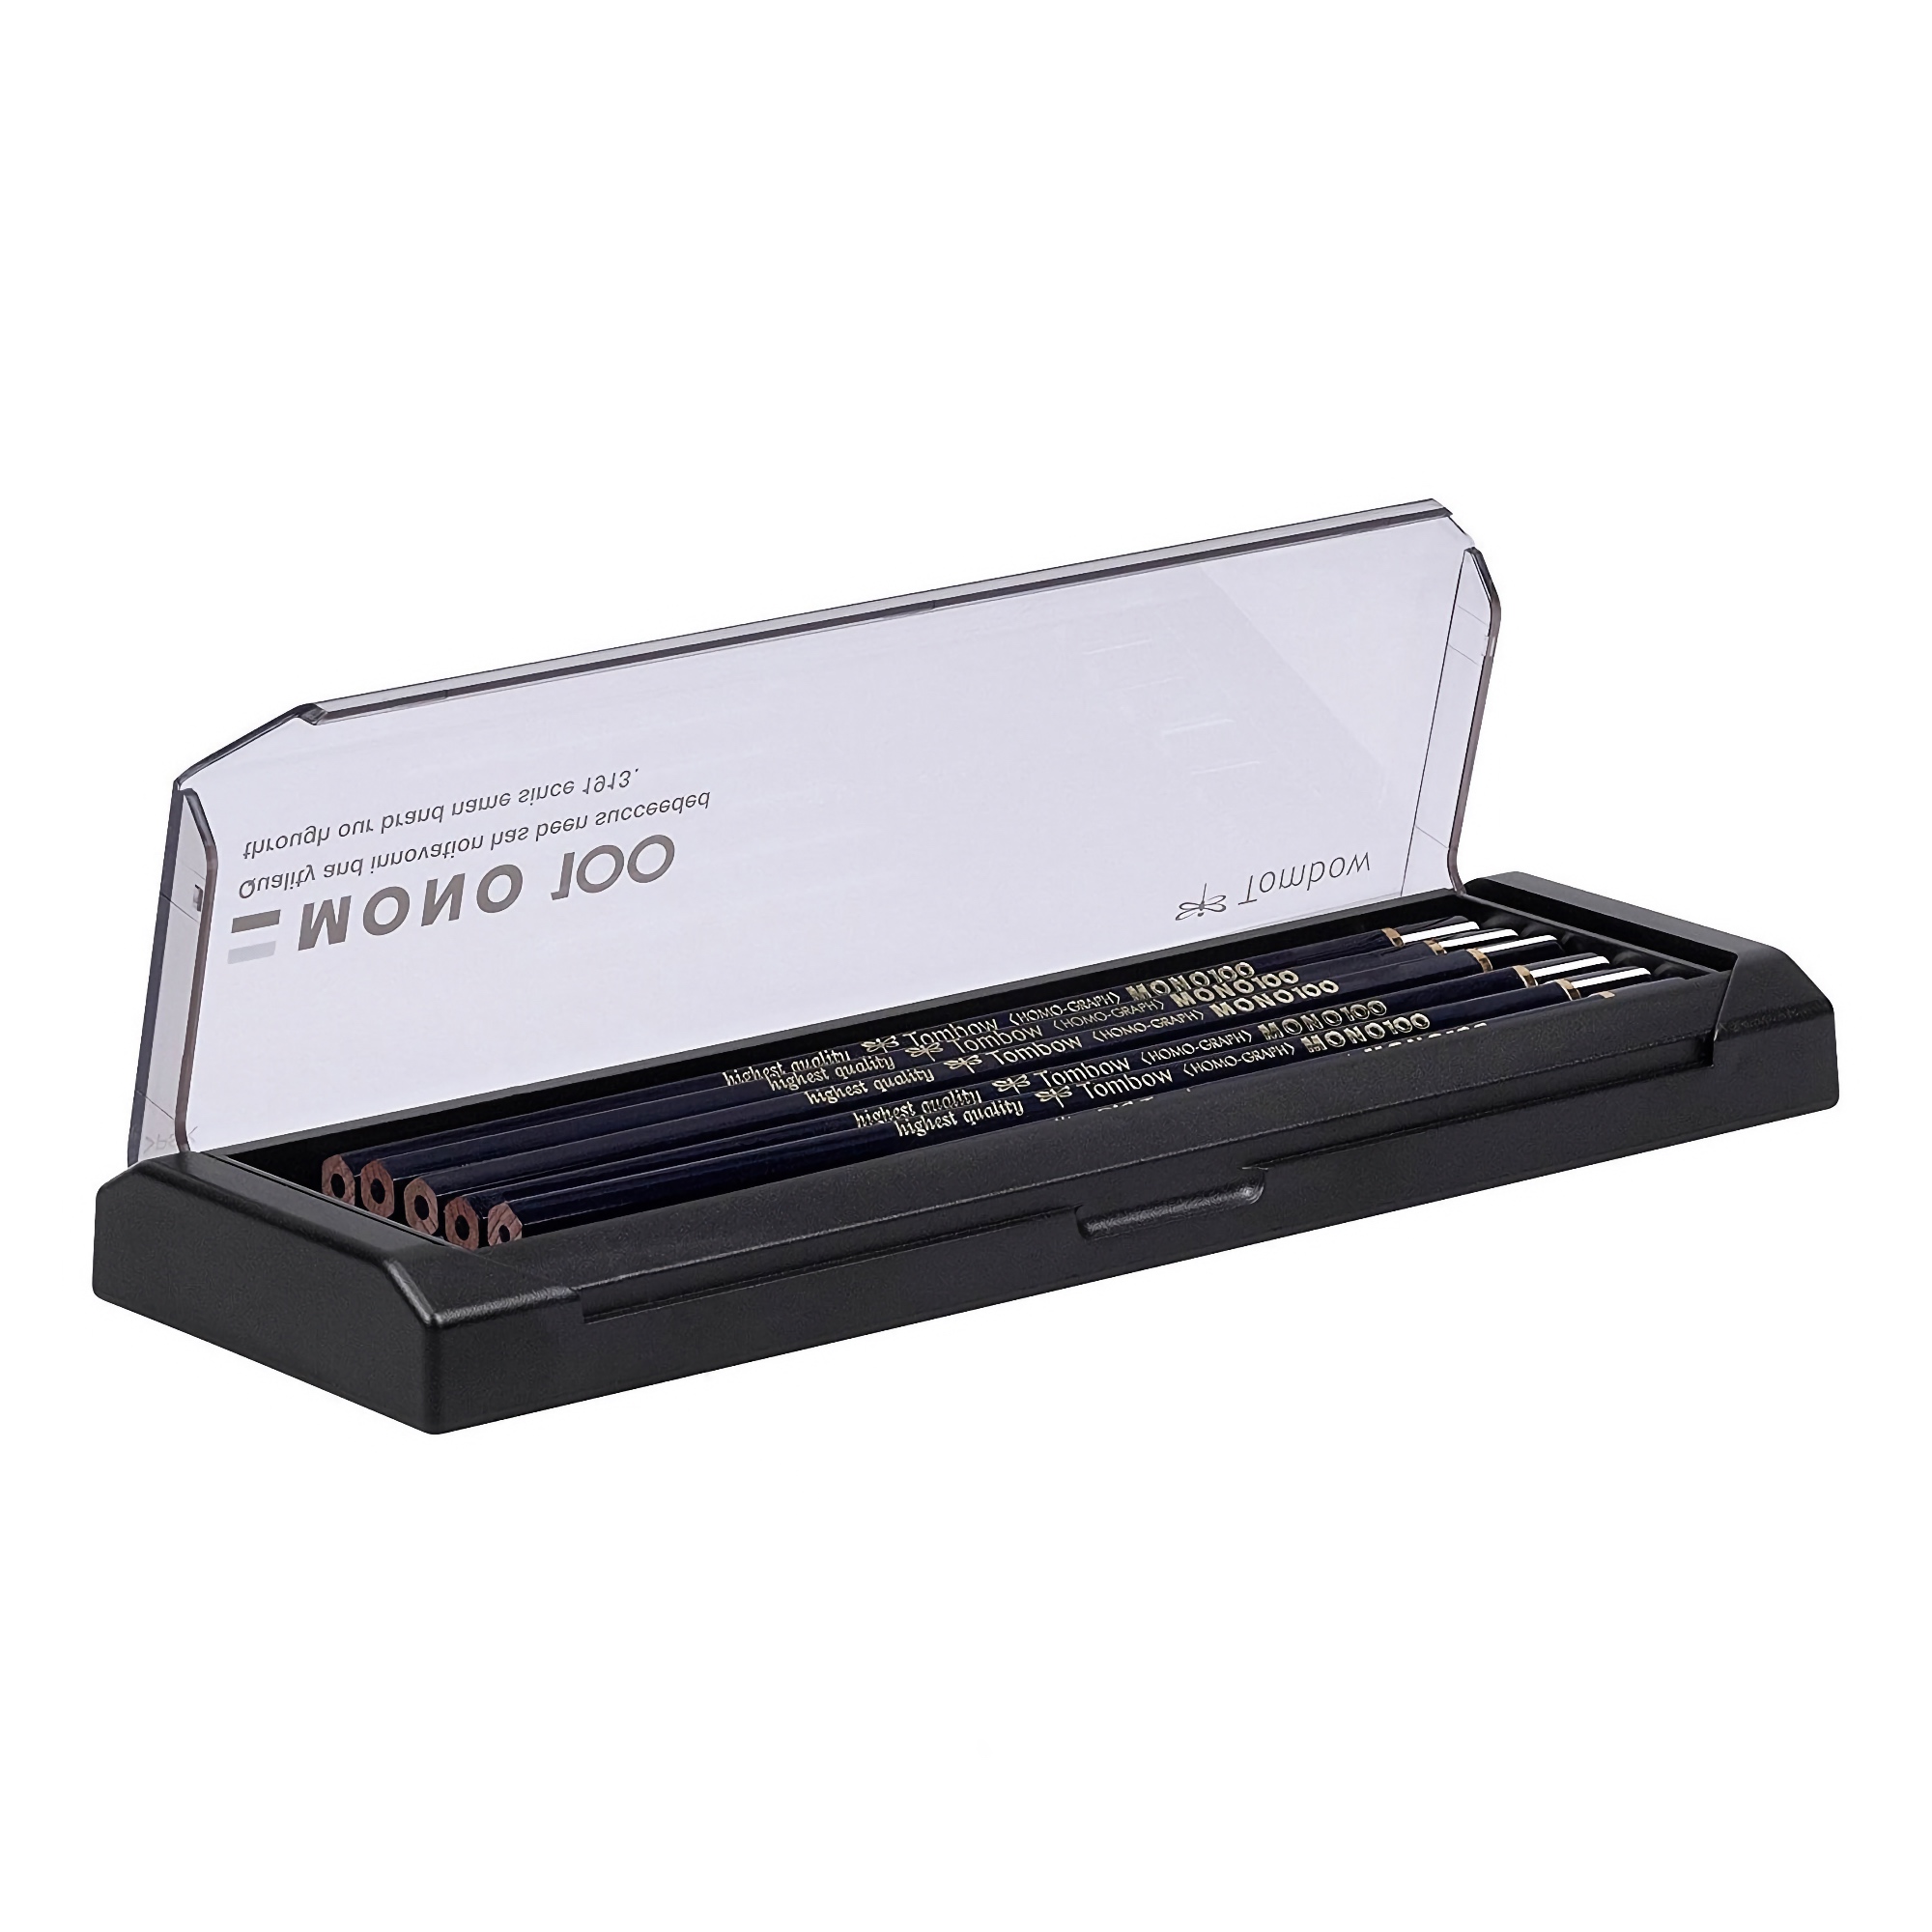 Tombow Mono 100 Pencil – 6B – set om 12